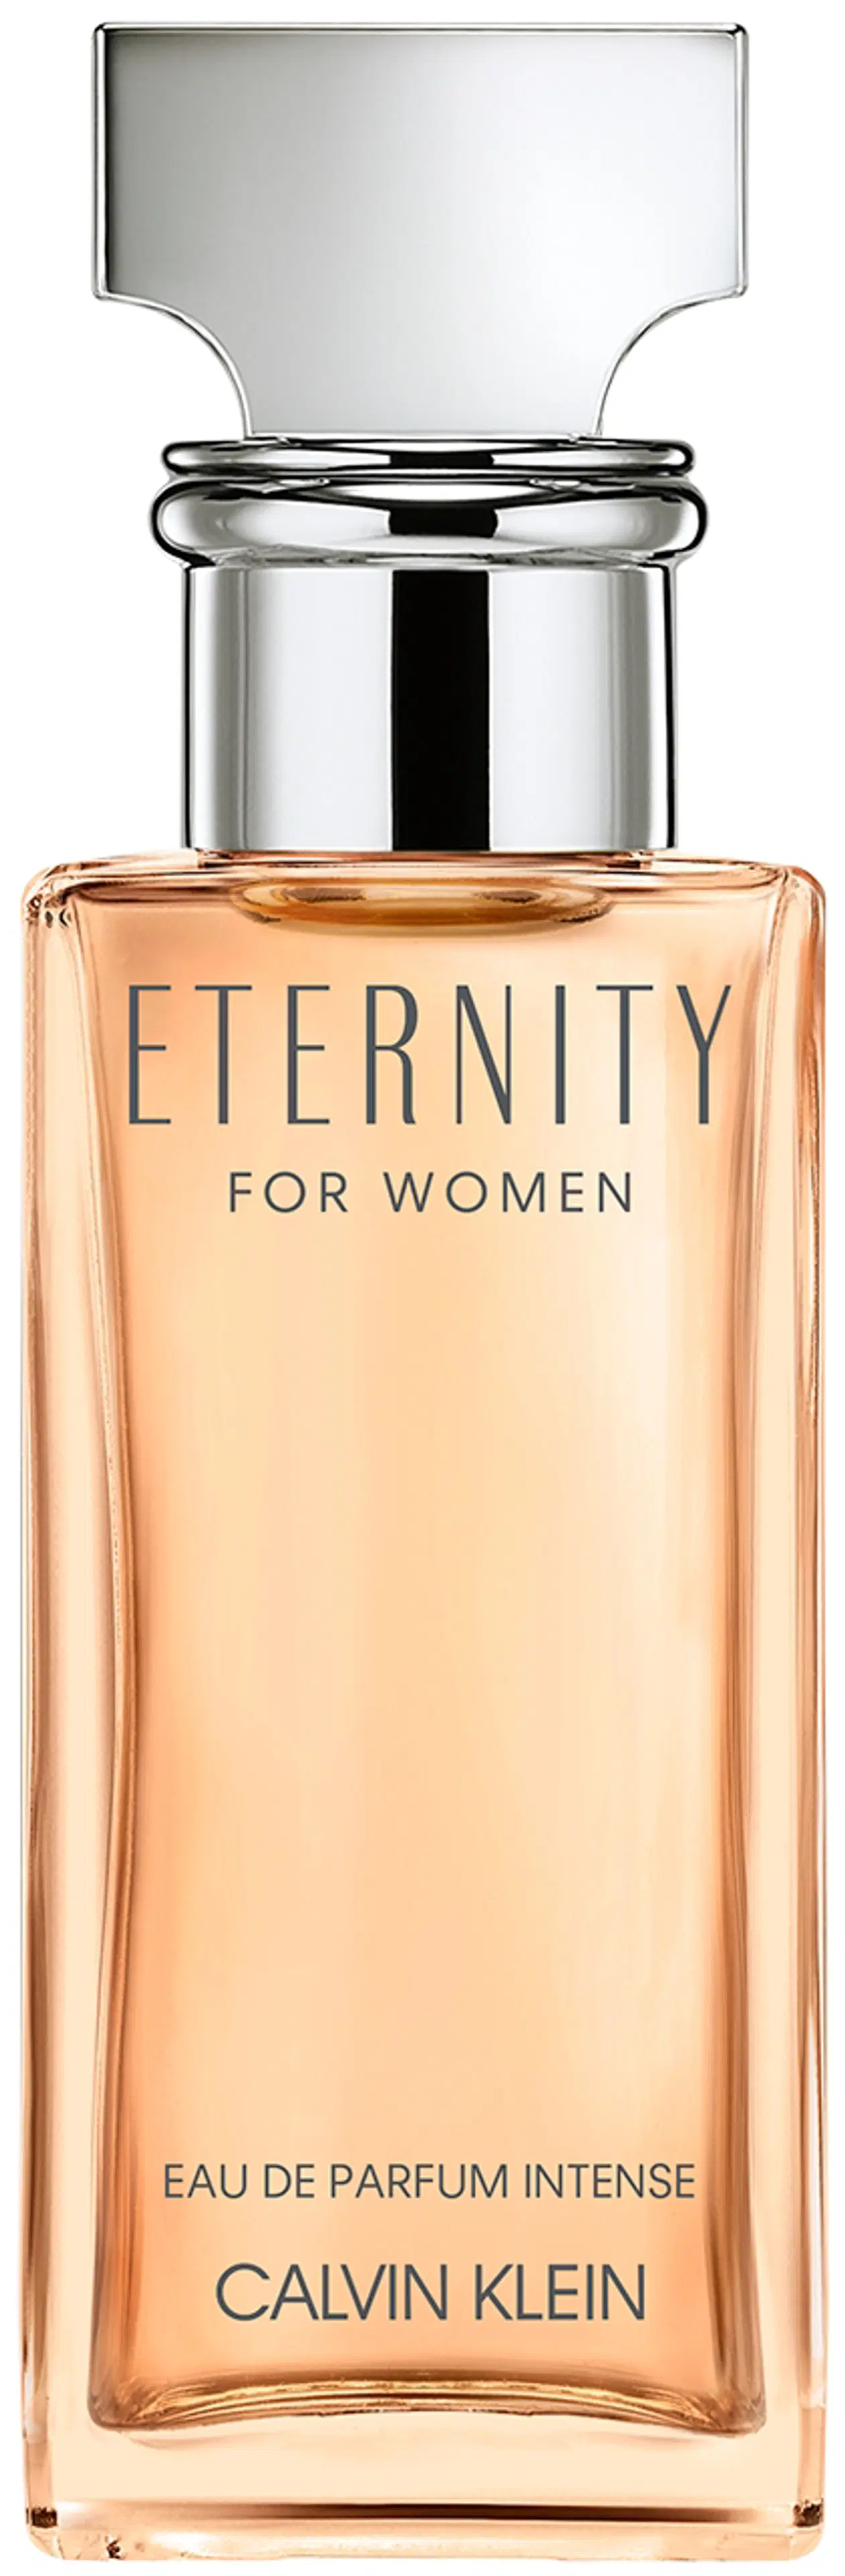 Calvin Klein Eternity For Women EdP Intense tuoksu 30 ml